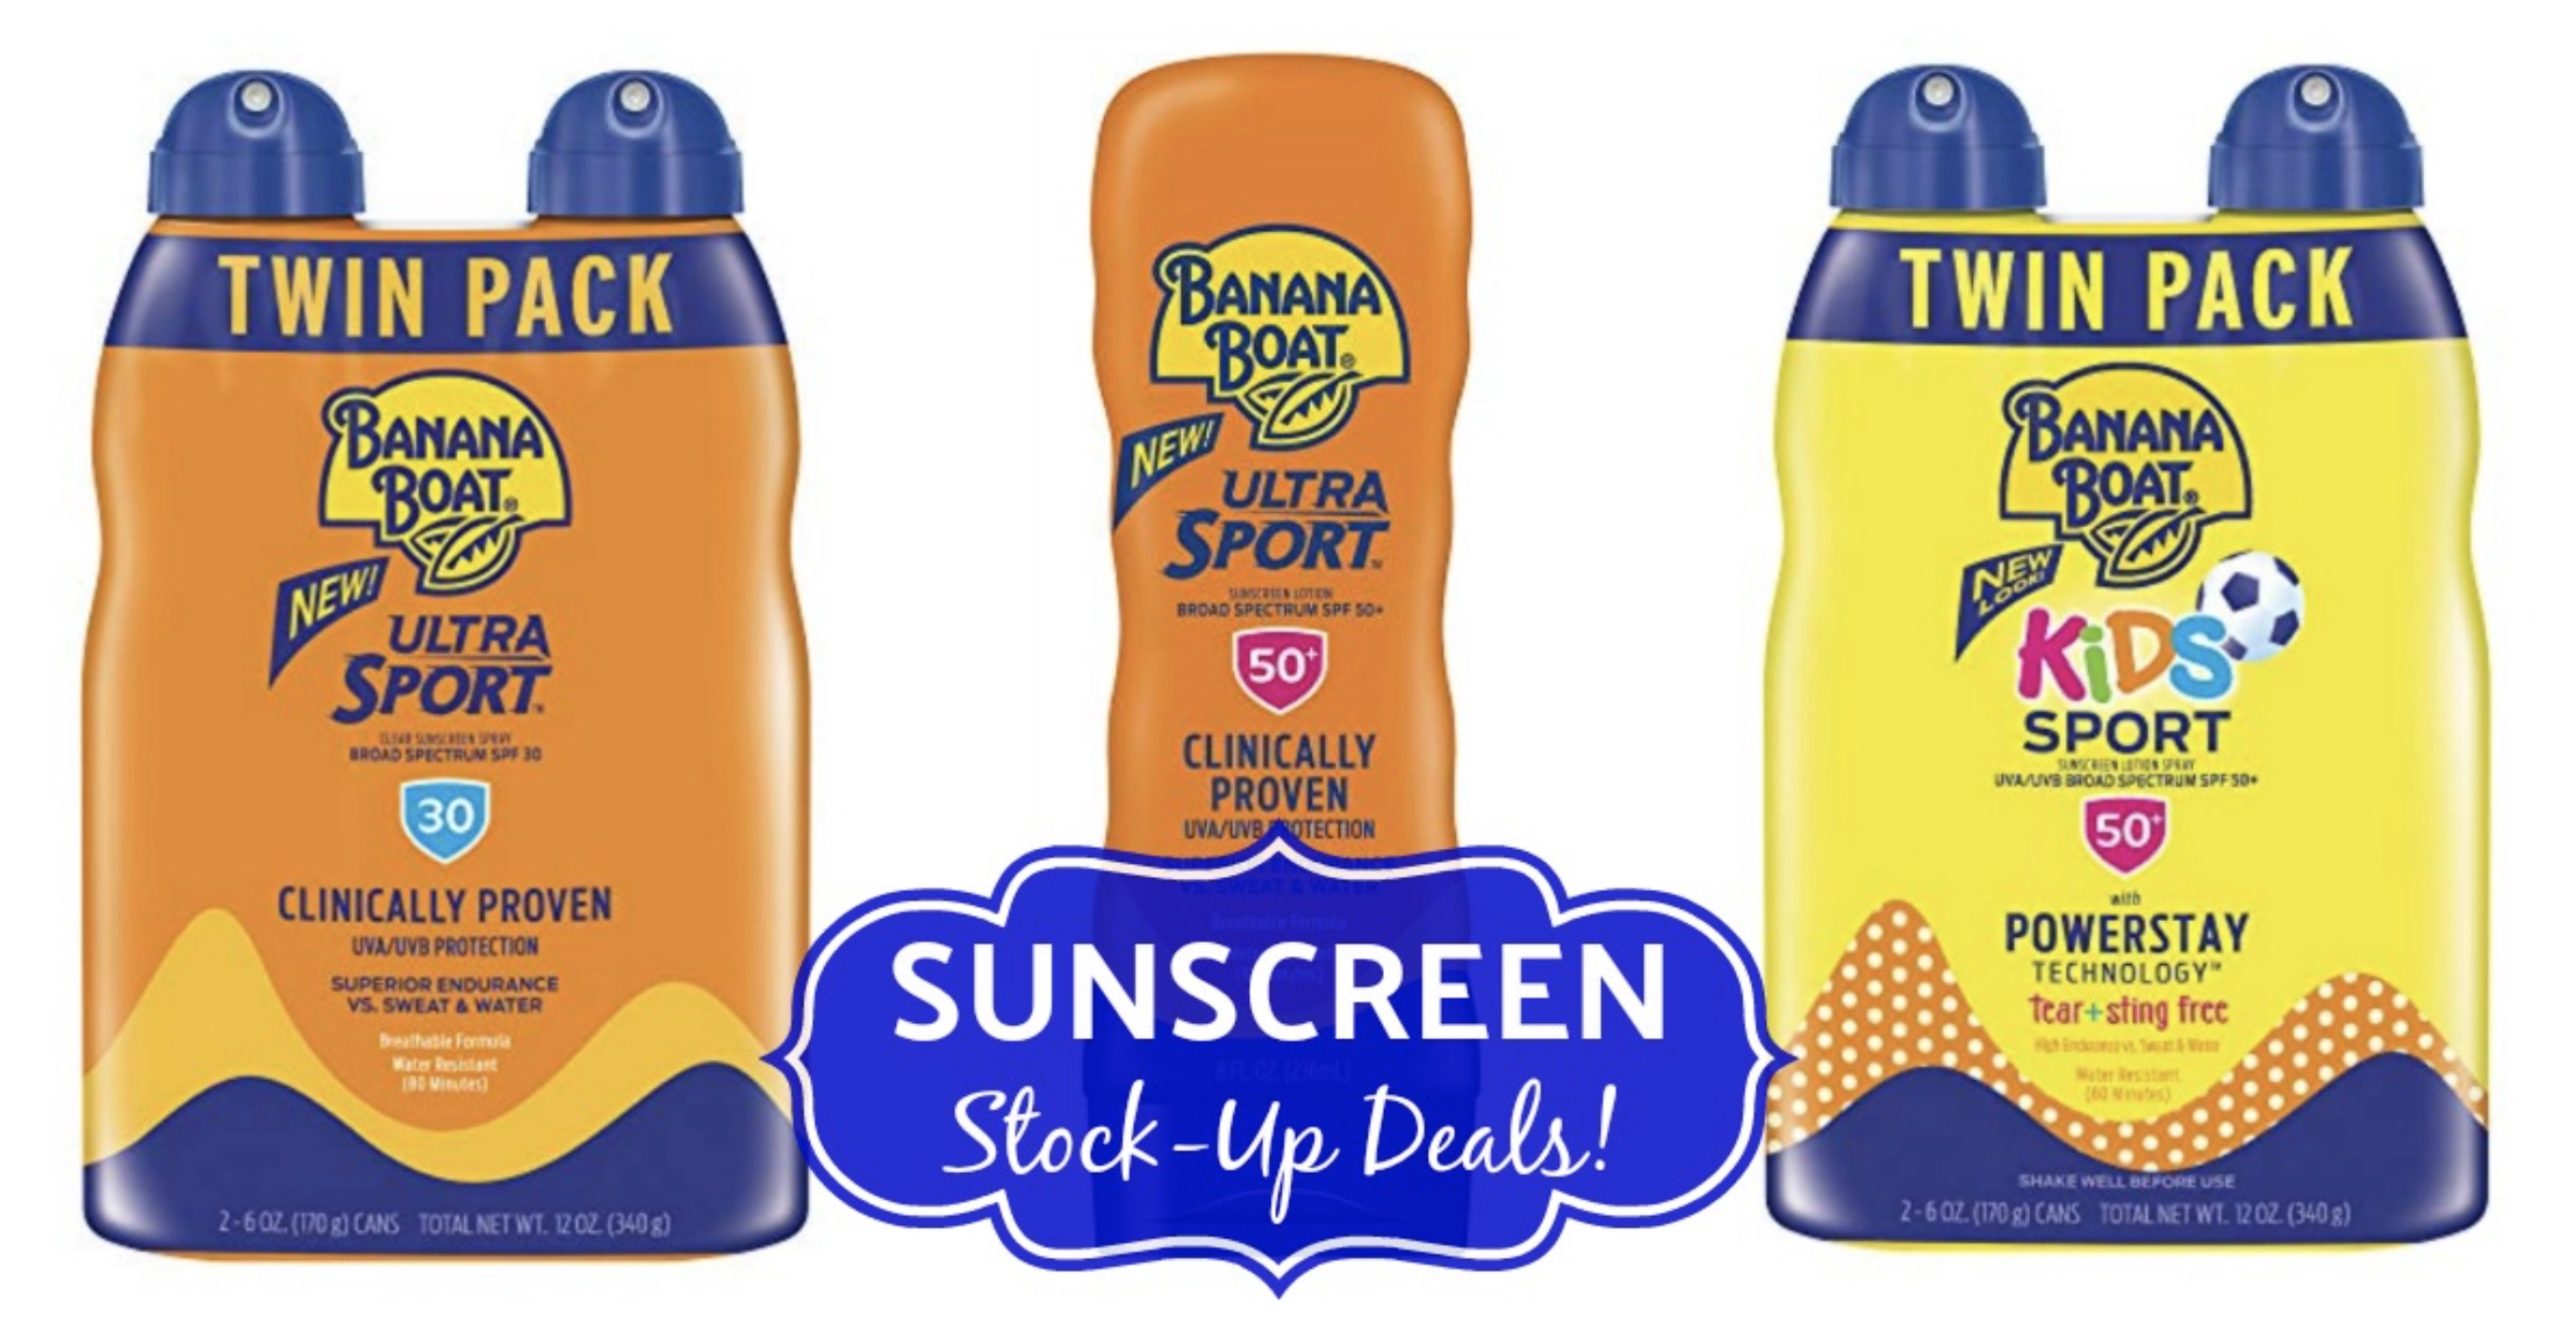 Banana Boat Coupons & Sunscreen Deals!